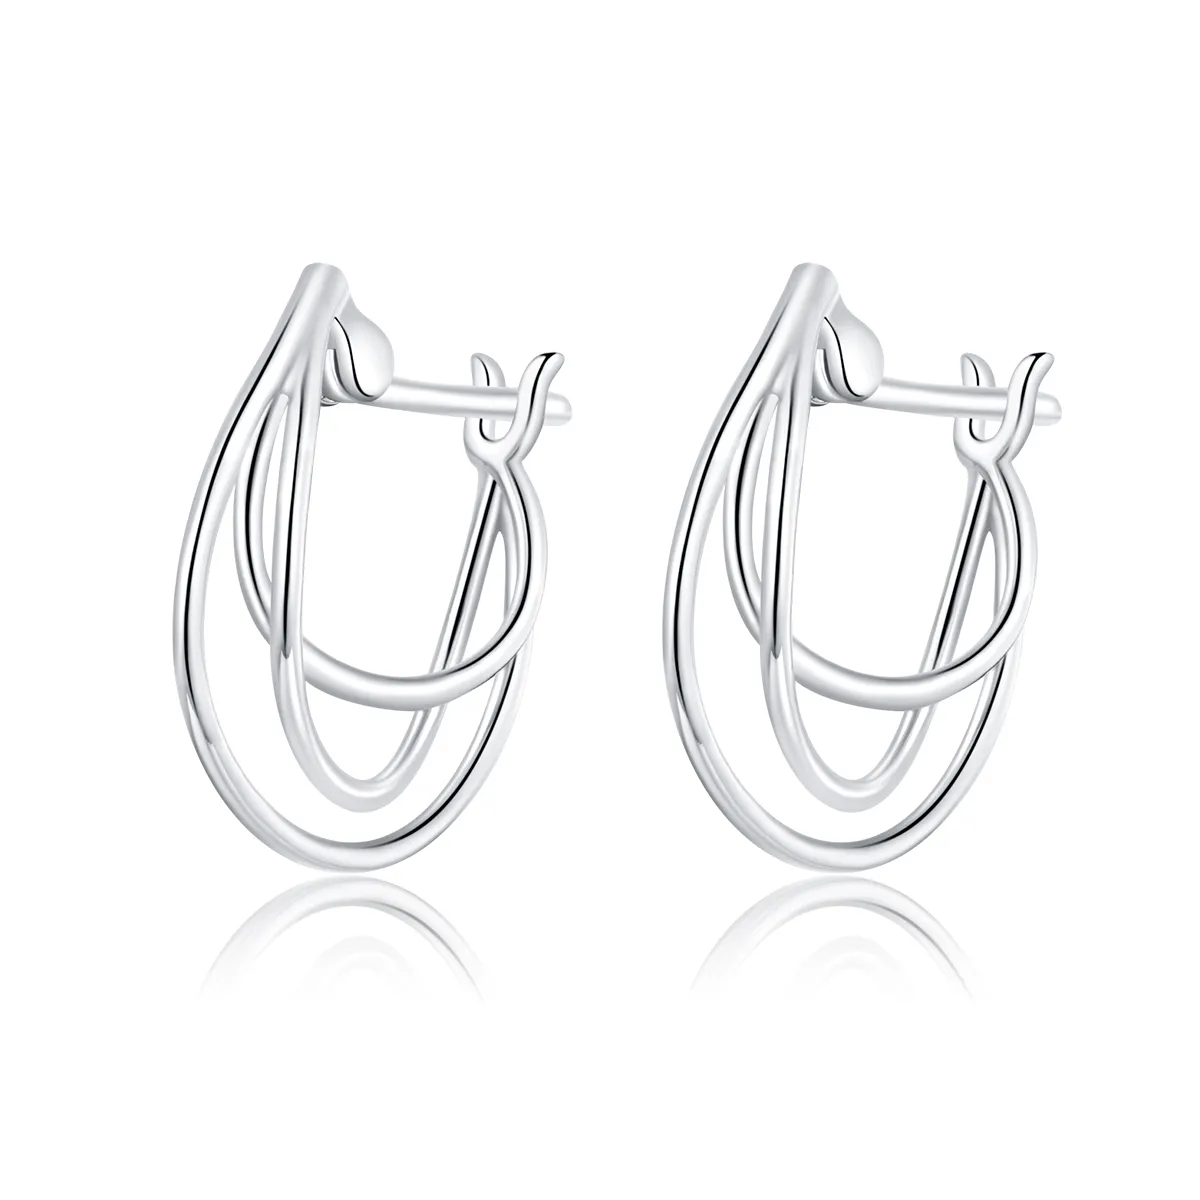 Pandora Style Silver Intertwined Lines Hoop Earrings - BSE443